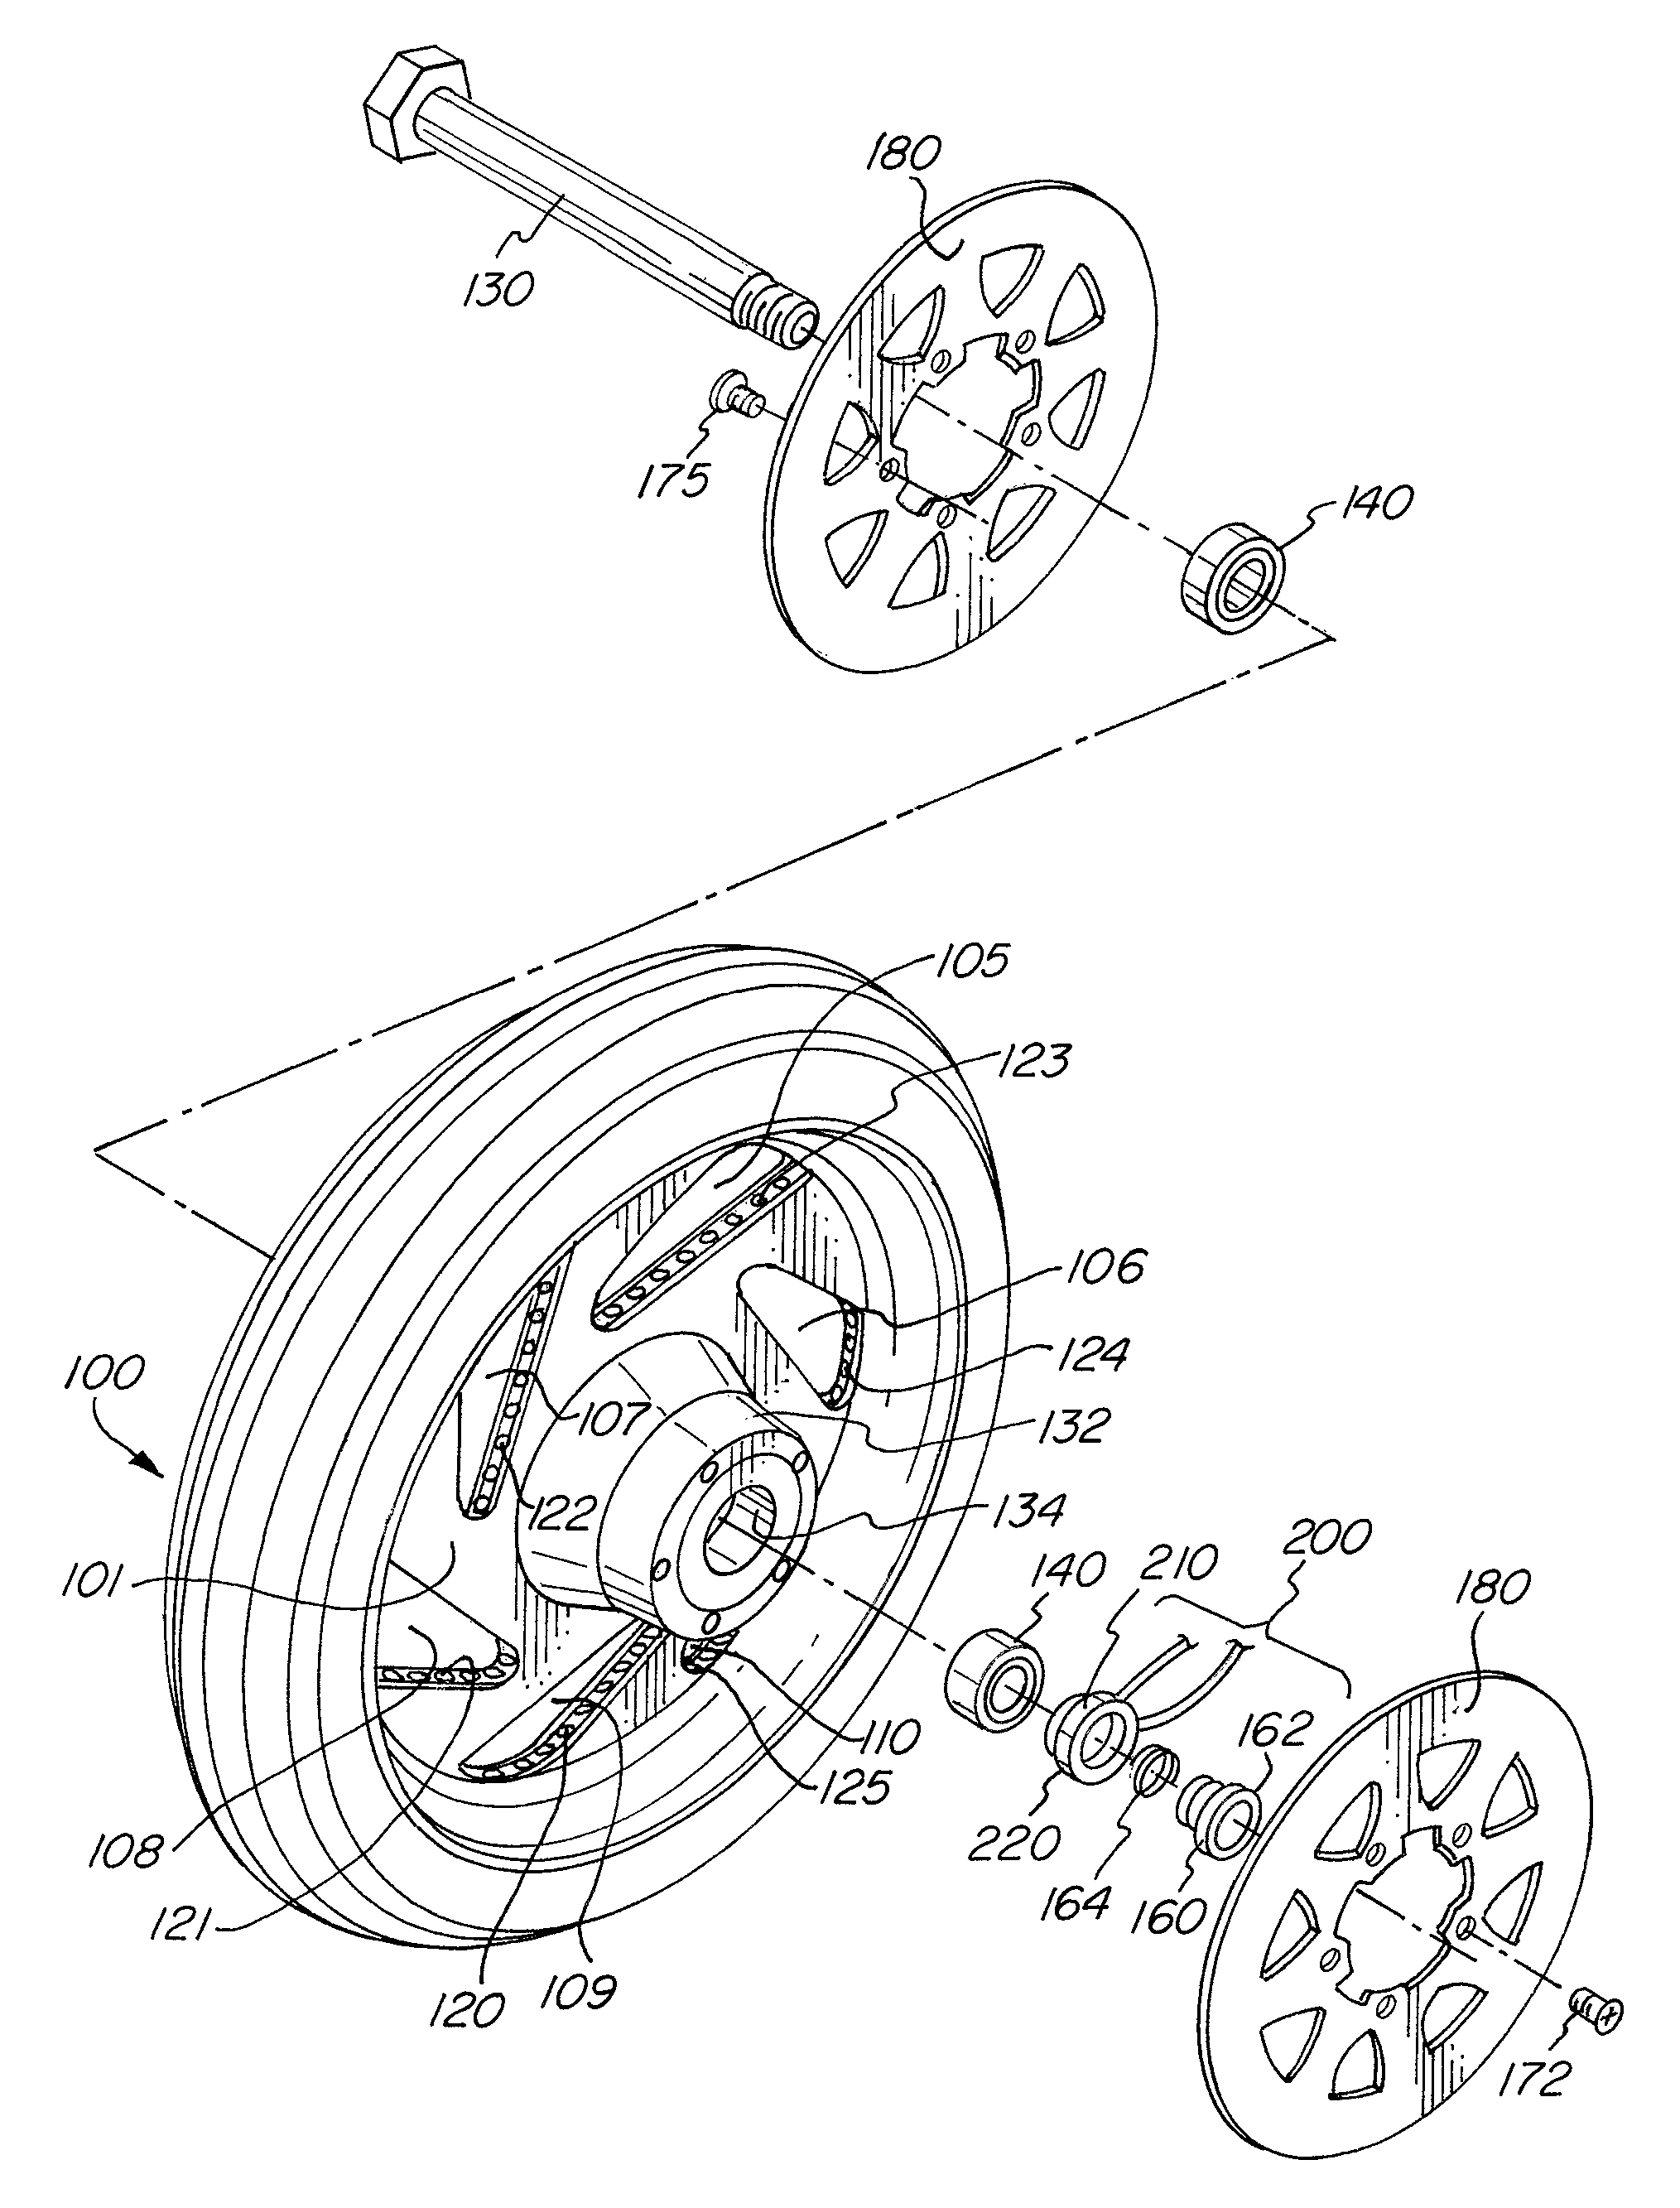 Illuminated vehicle wheel with bearing seal slip ring assembly